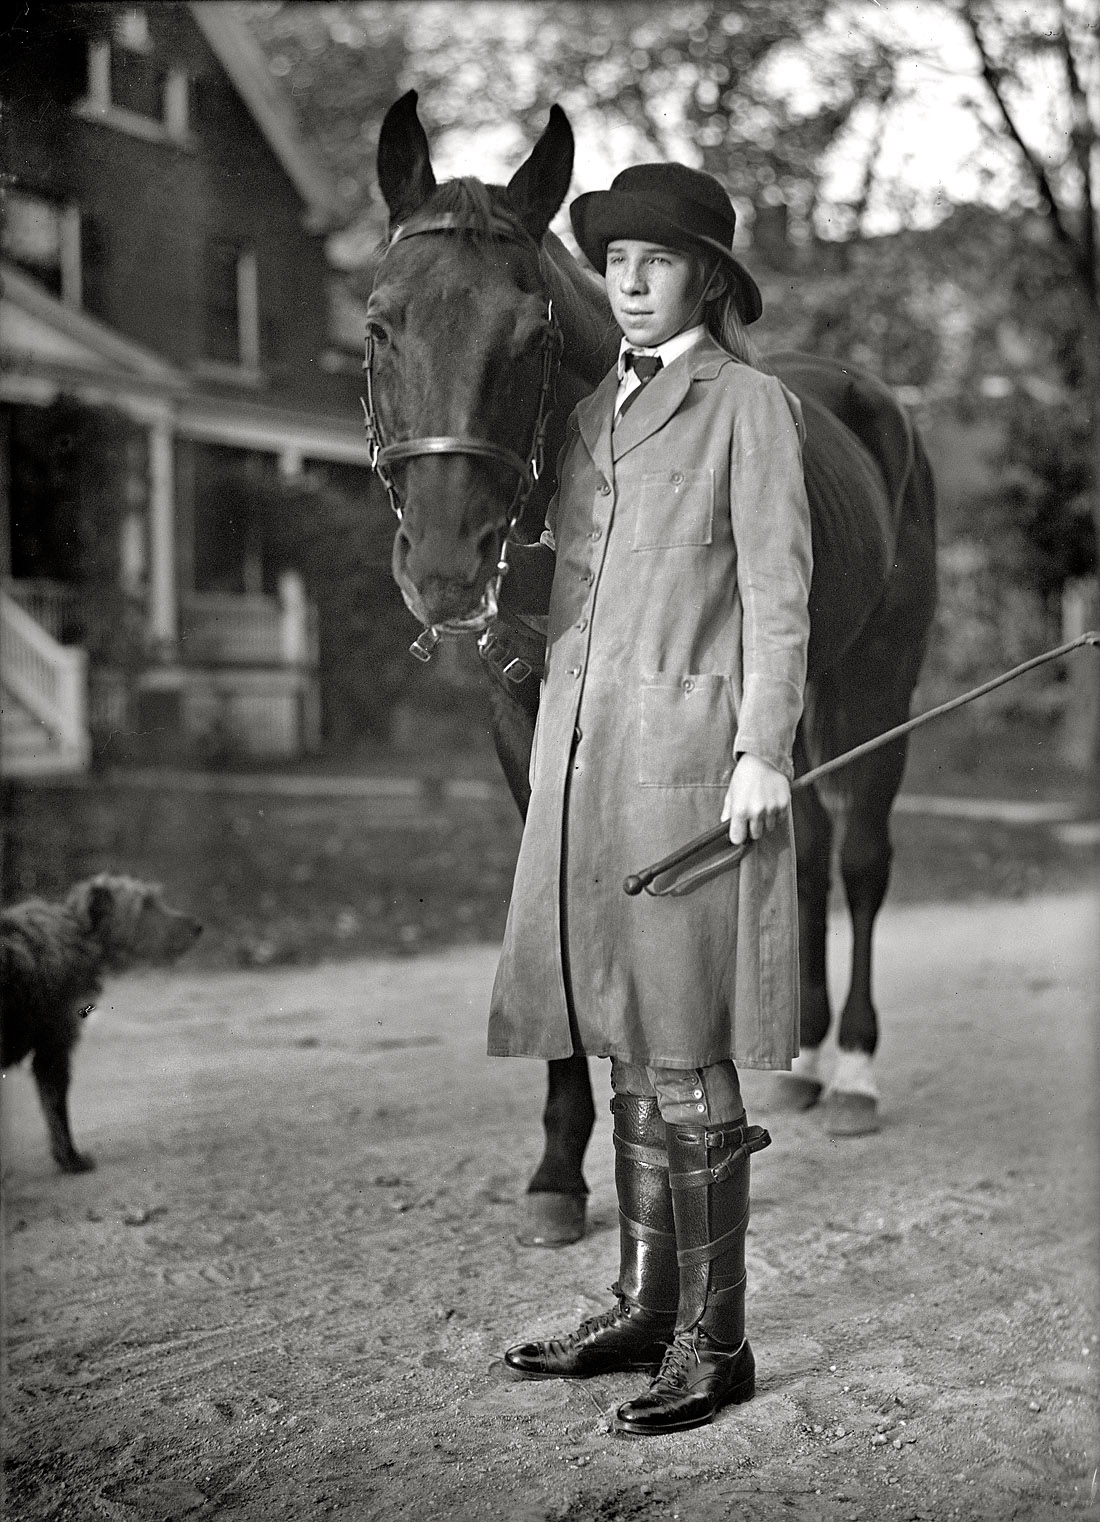 Washington, D.C., 1913. "Louisto Wood," it says here. AKA Louisita Wood, daughter of Major General Leonard Wood, Army chief of staff. Harris & Ewing glass negative. View full size.